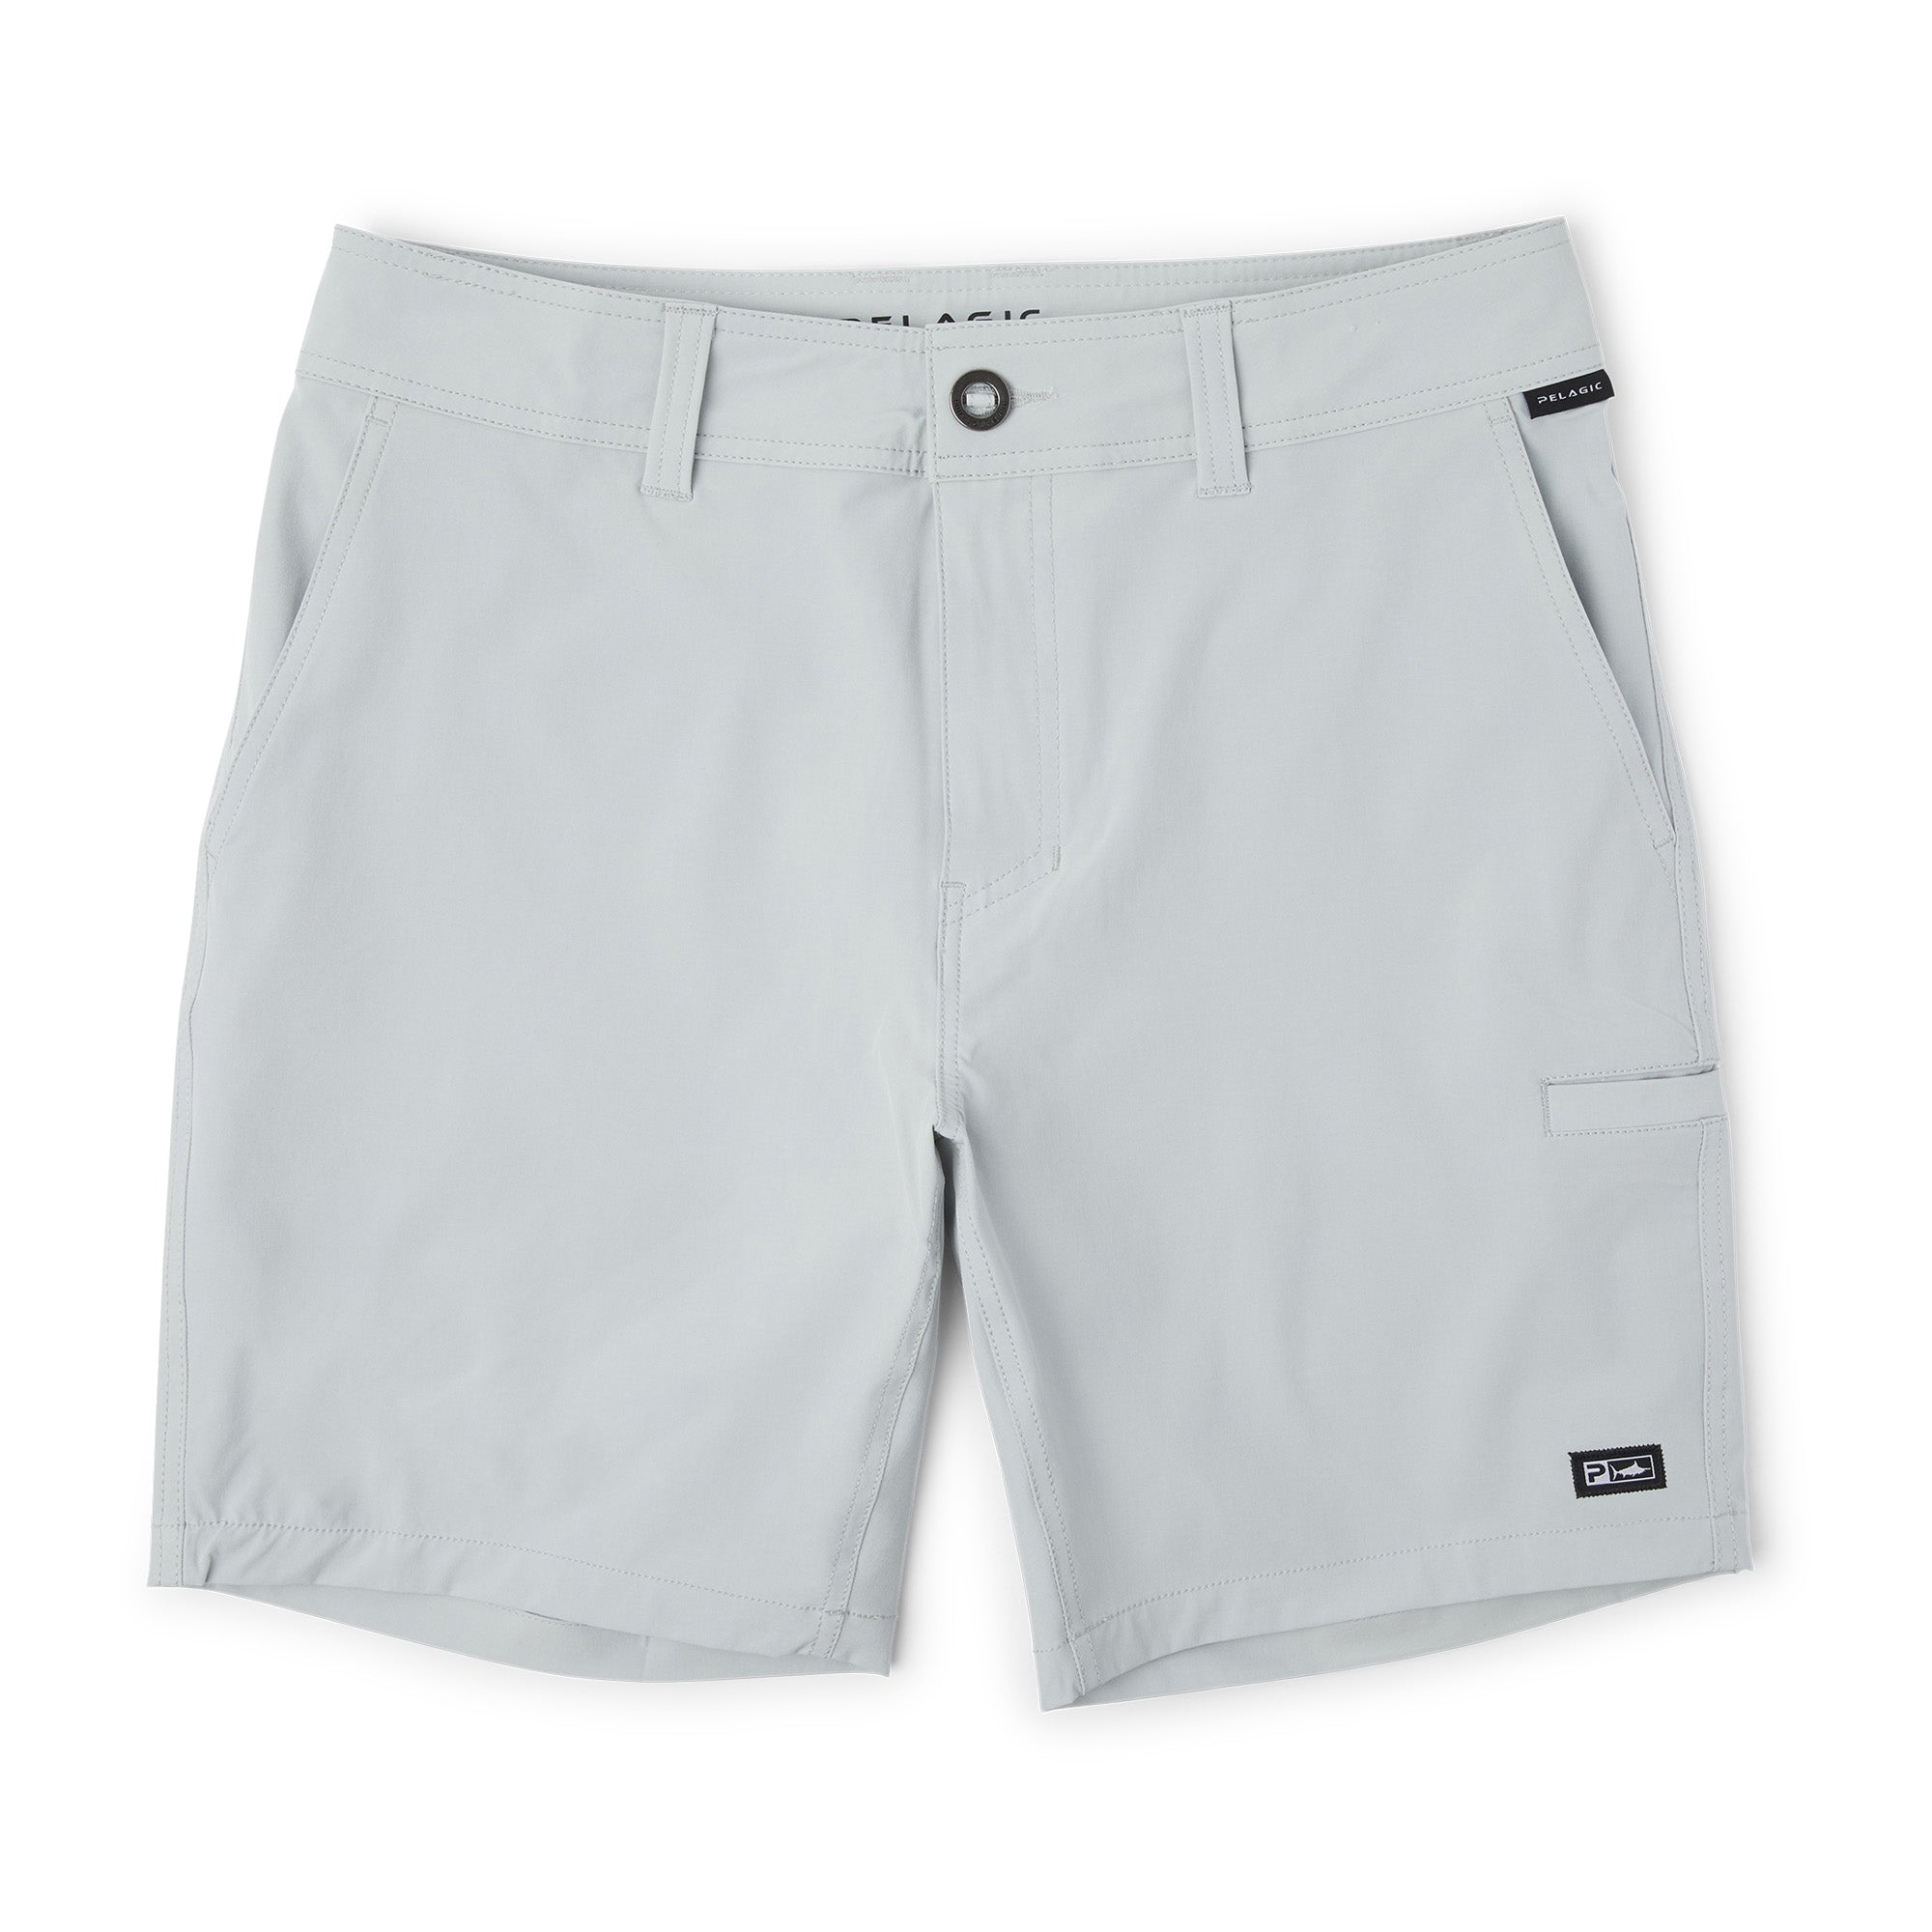 Pelagic Mako Hybrid Shorts 18 36 / Light Grey